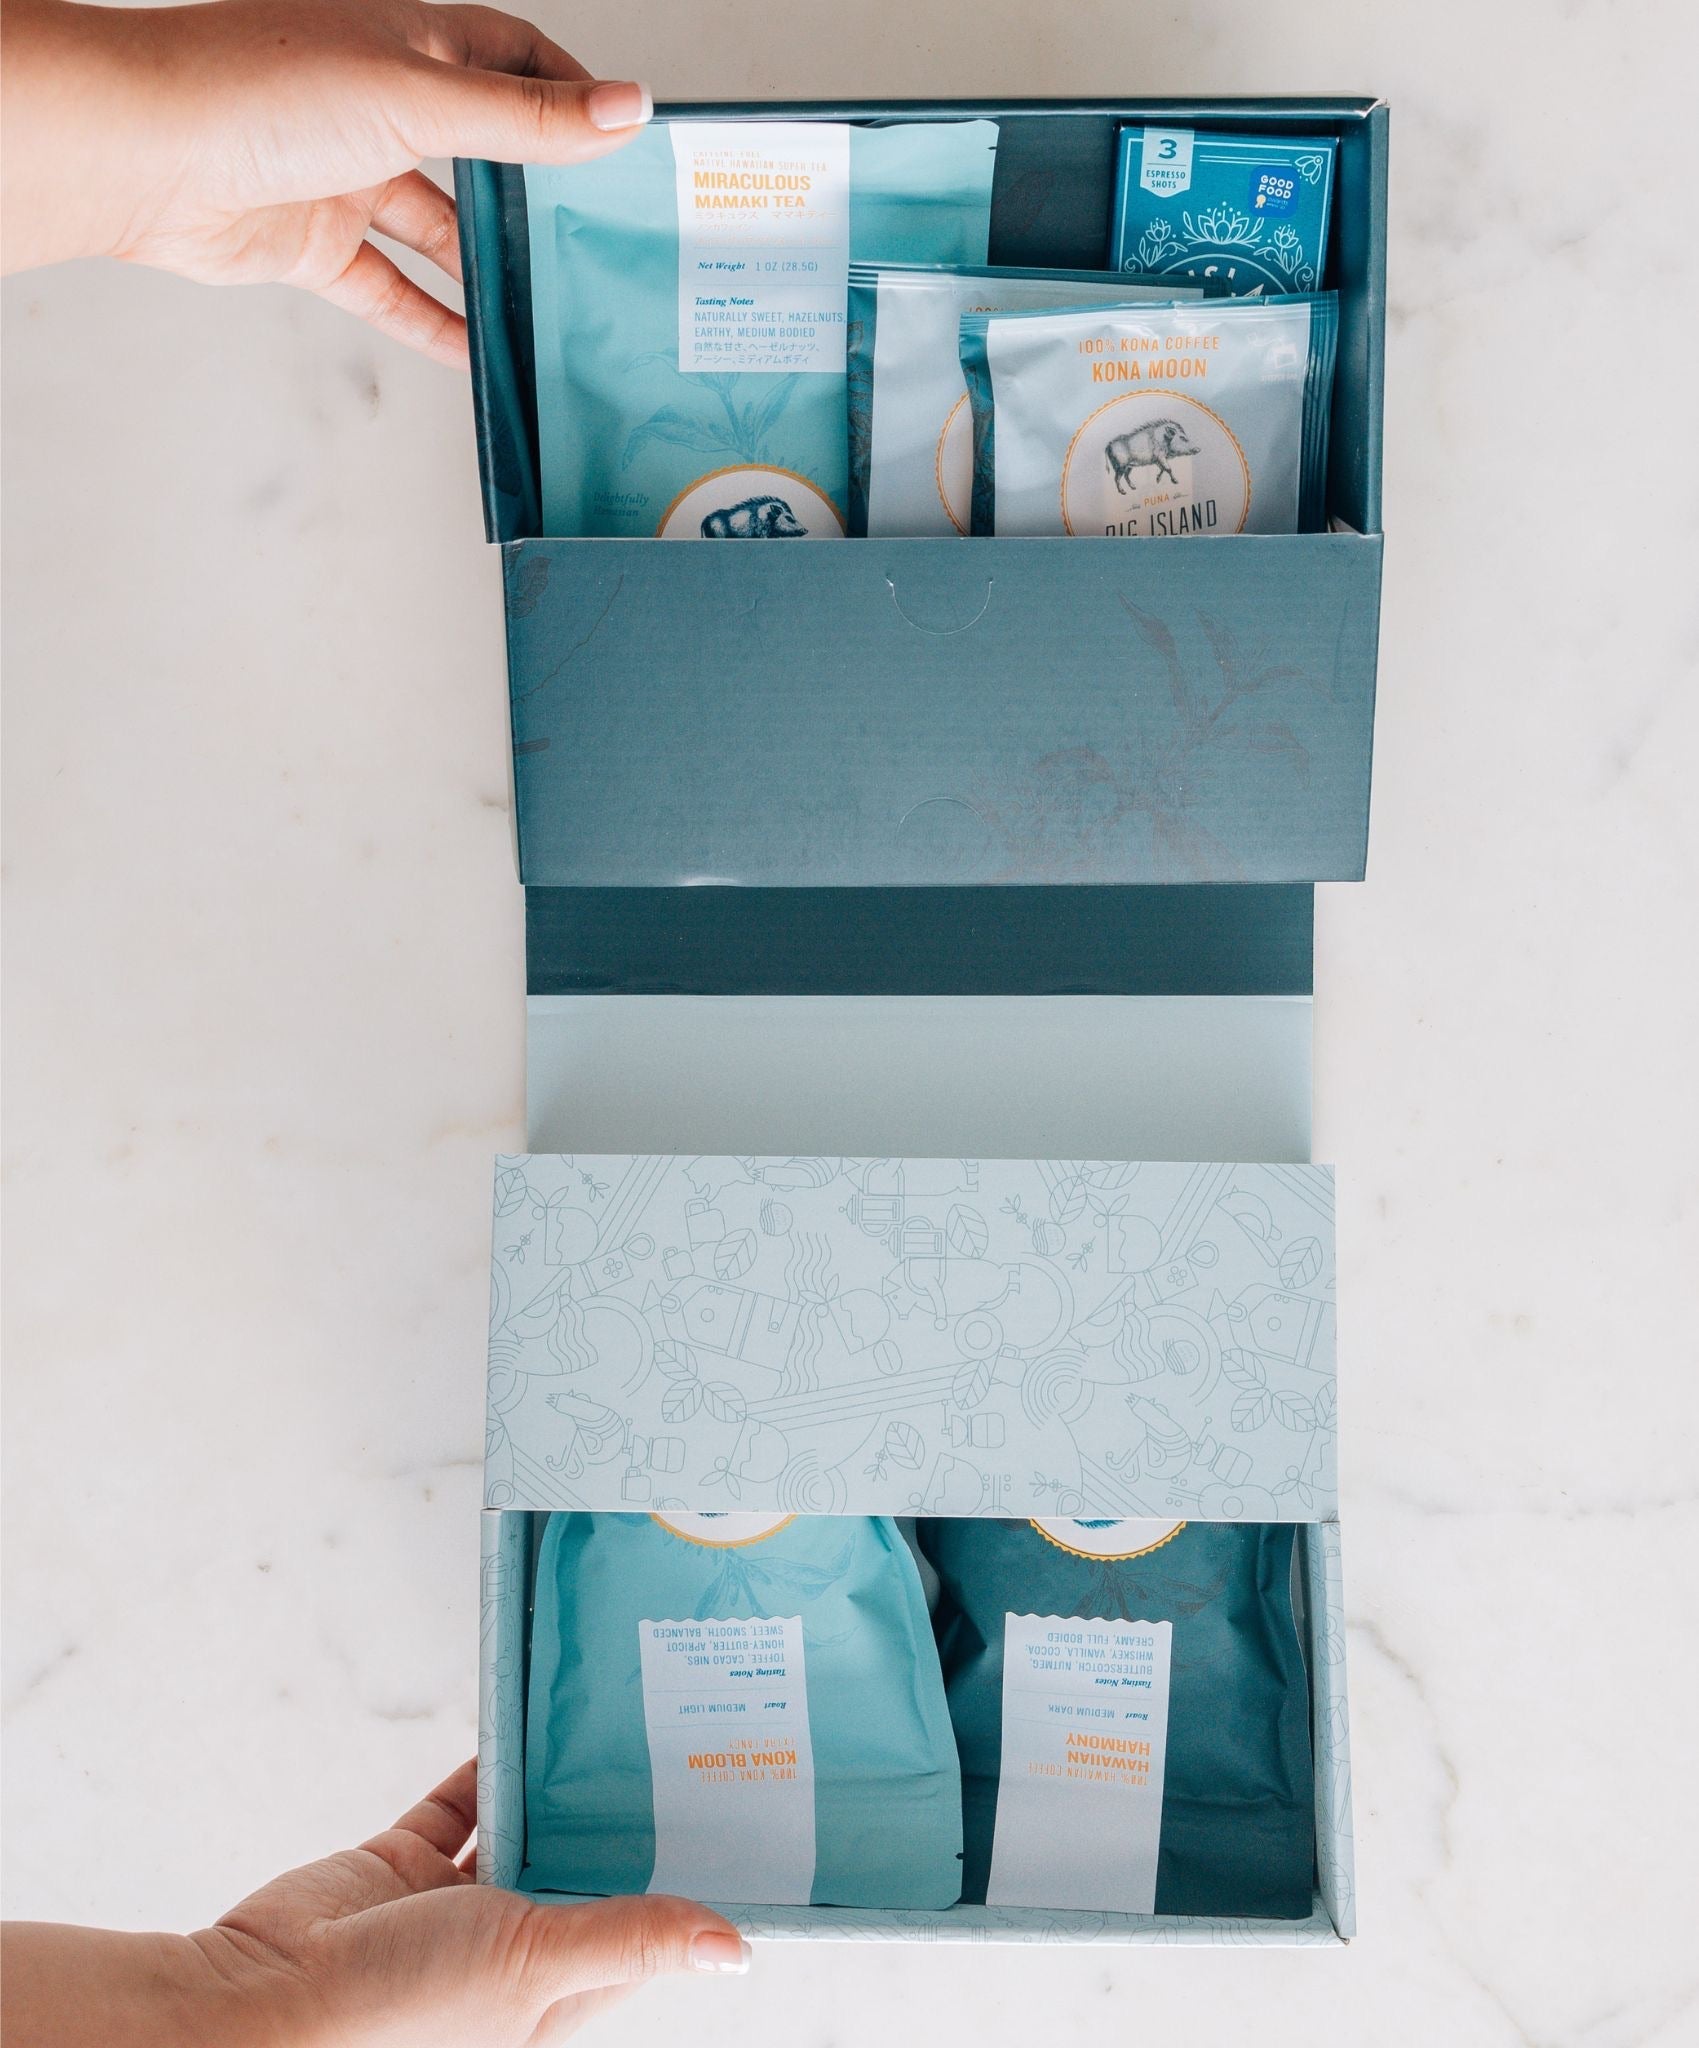 Kona Coffee Gift Box